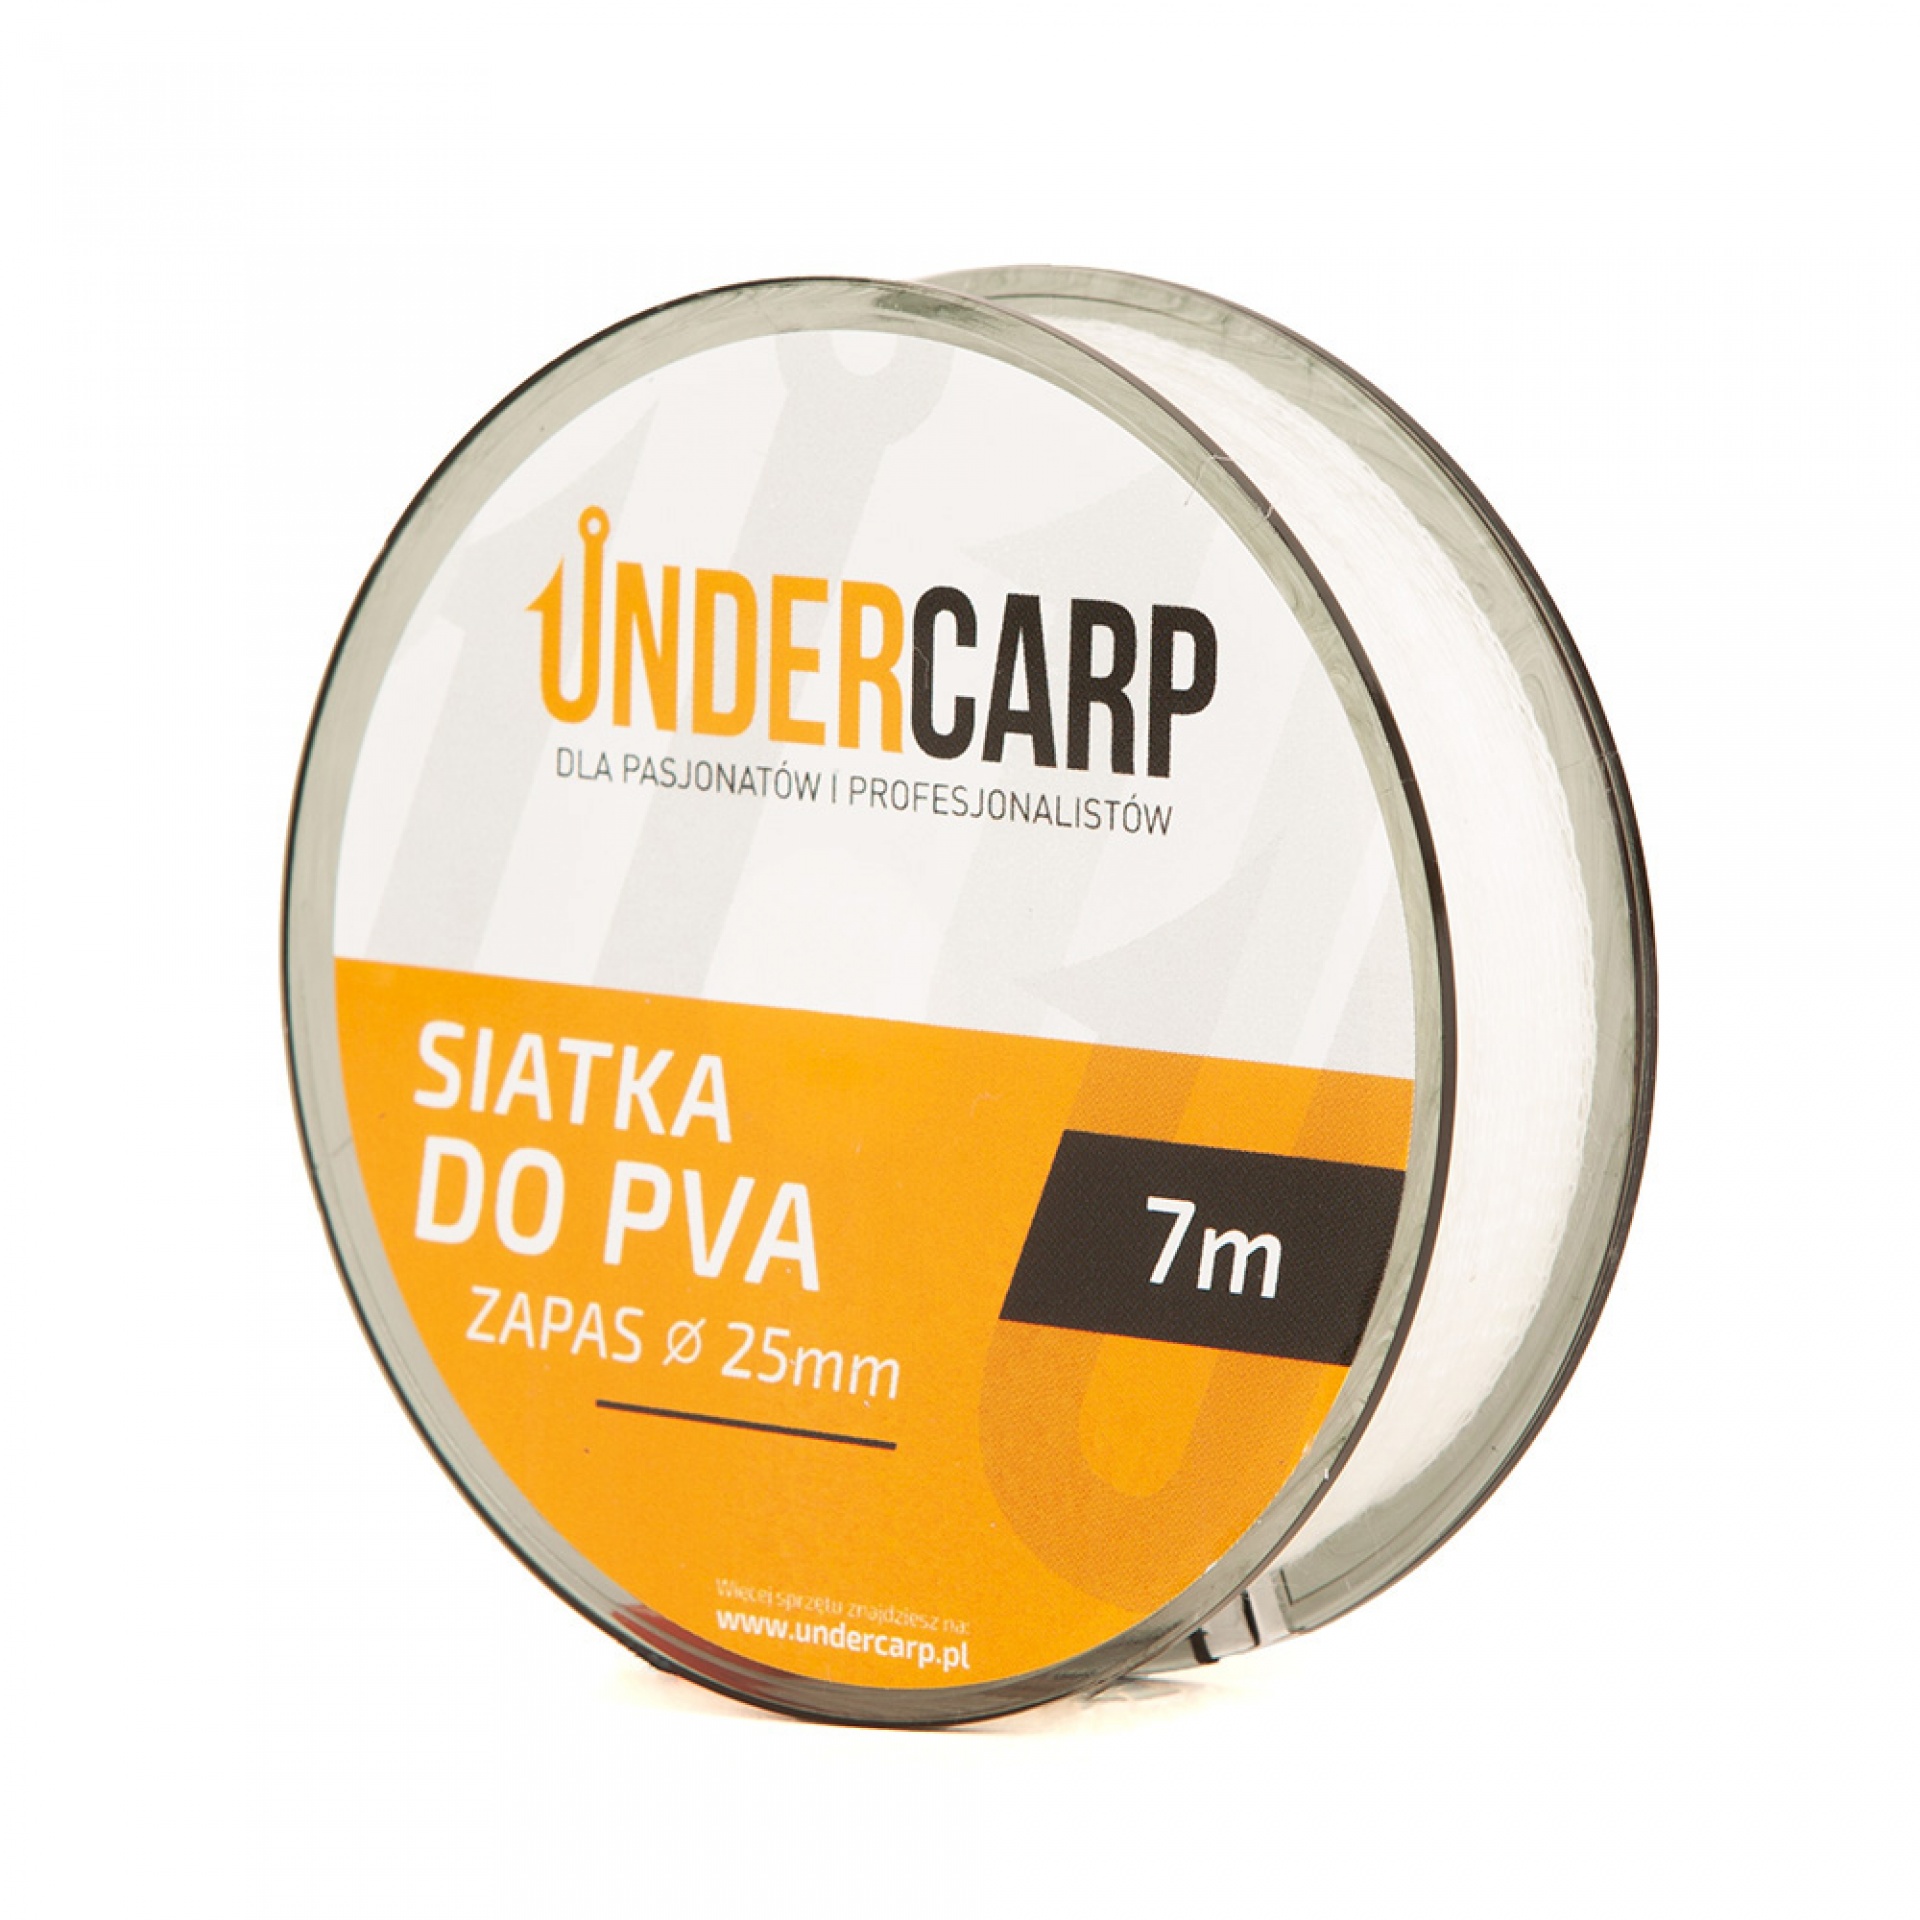 UnderCarp - Náhradní PVA síť 25mm 7m